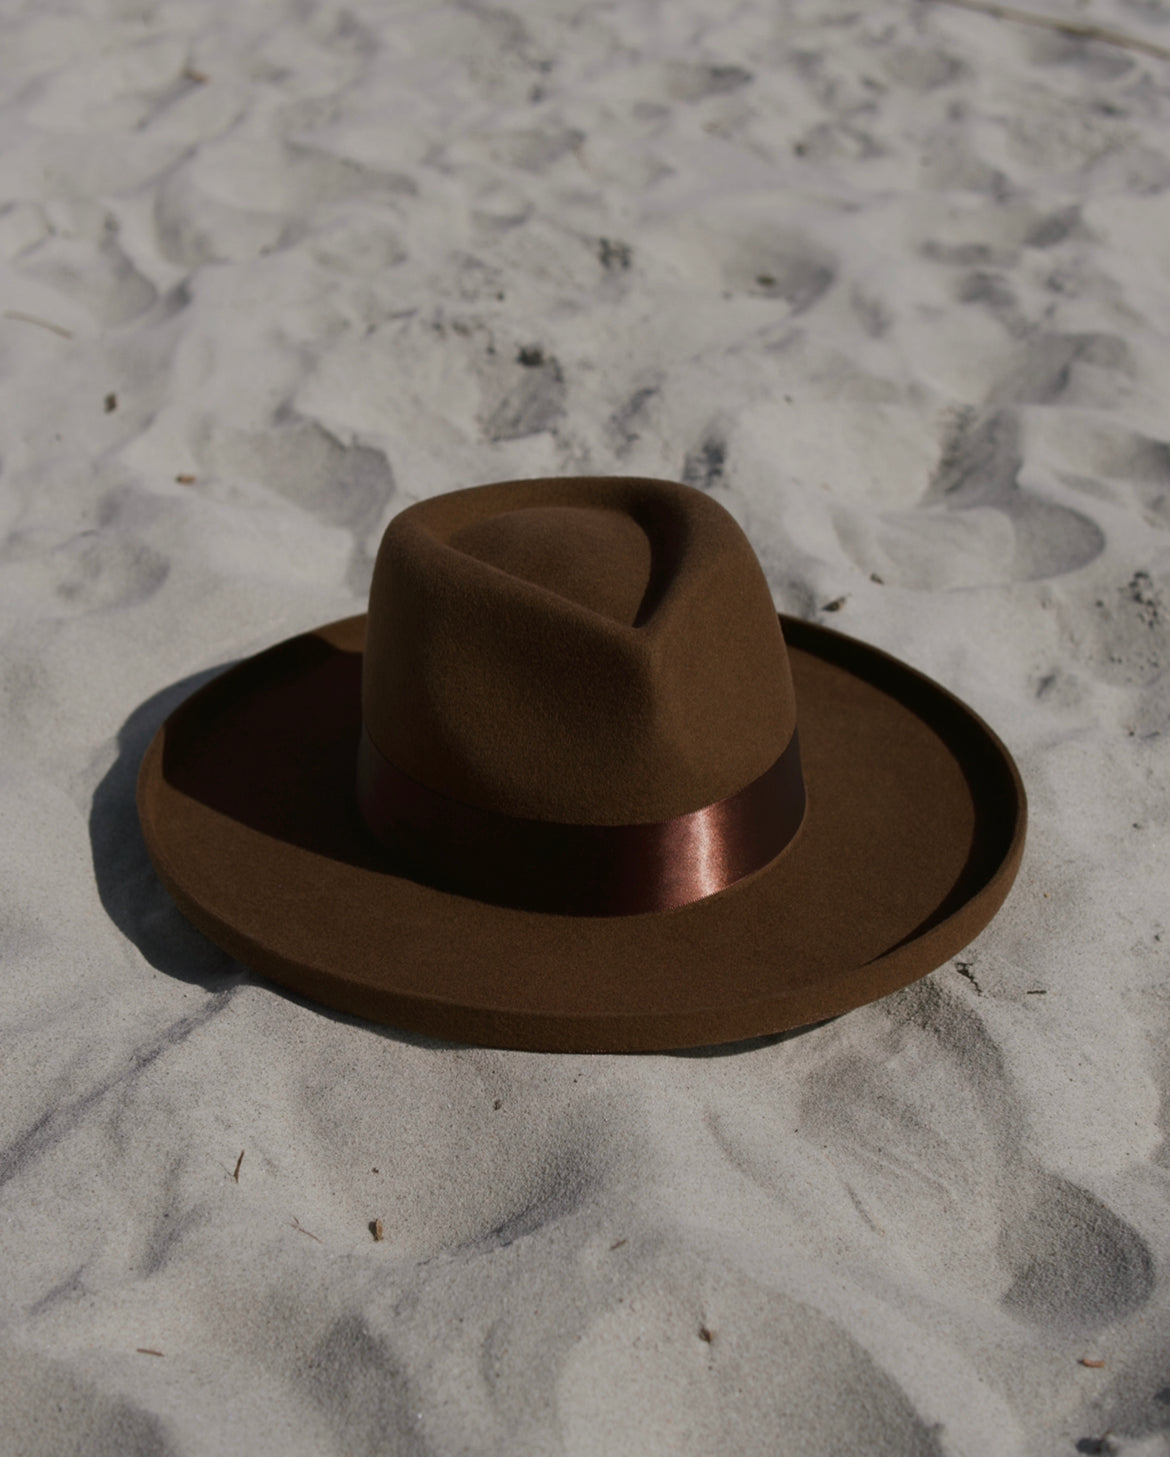 Sydney - 100% Wool Hat